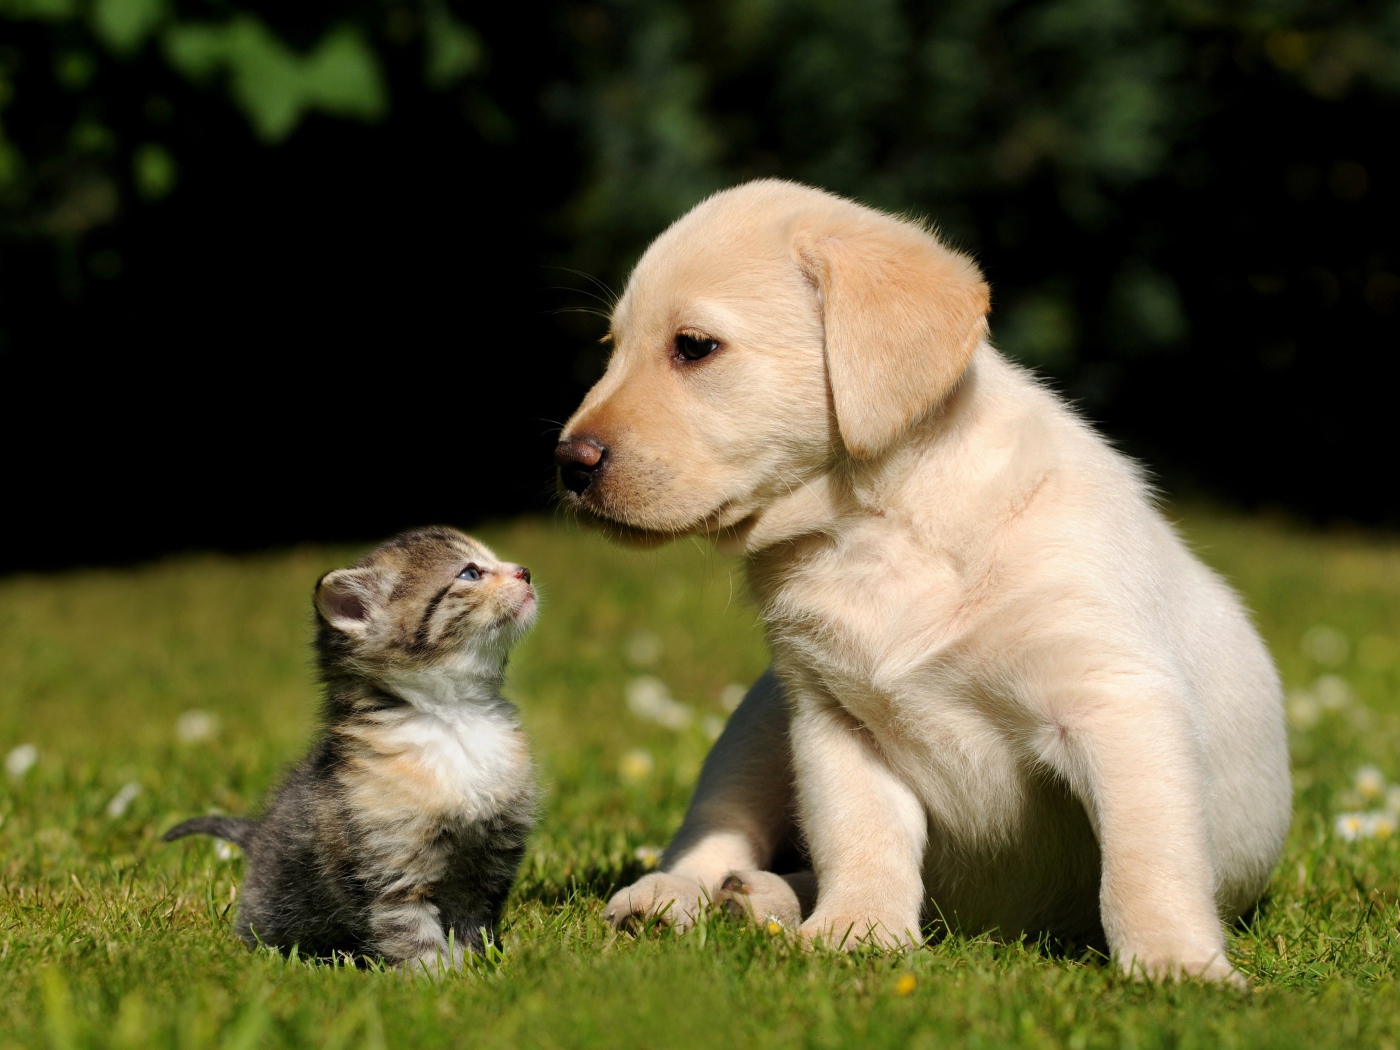 A small puppy of a golden retriever and a gray kitten on green grass